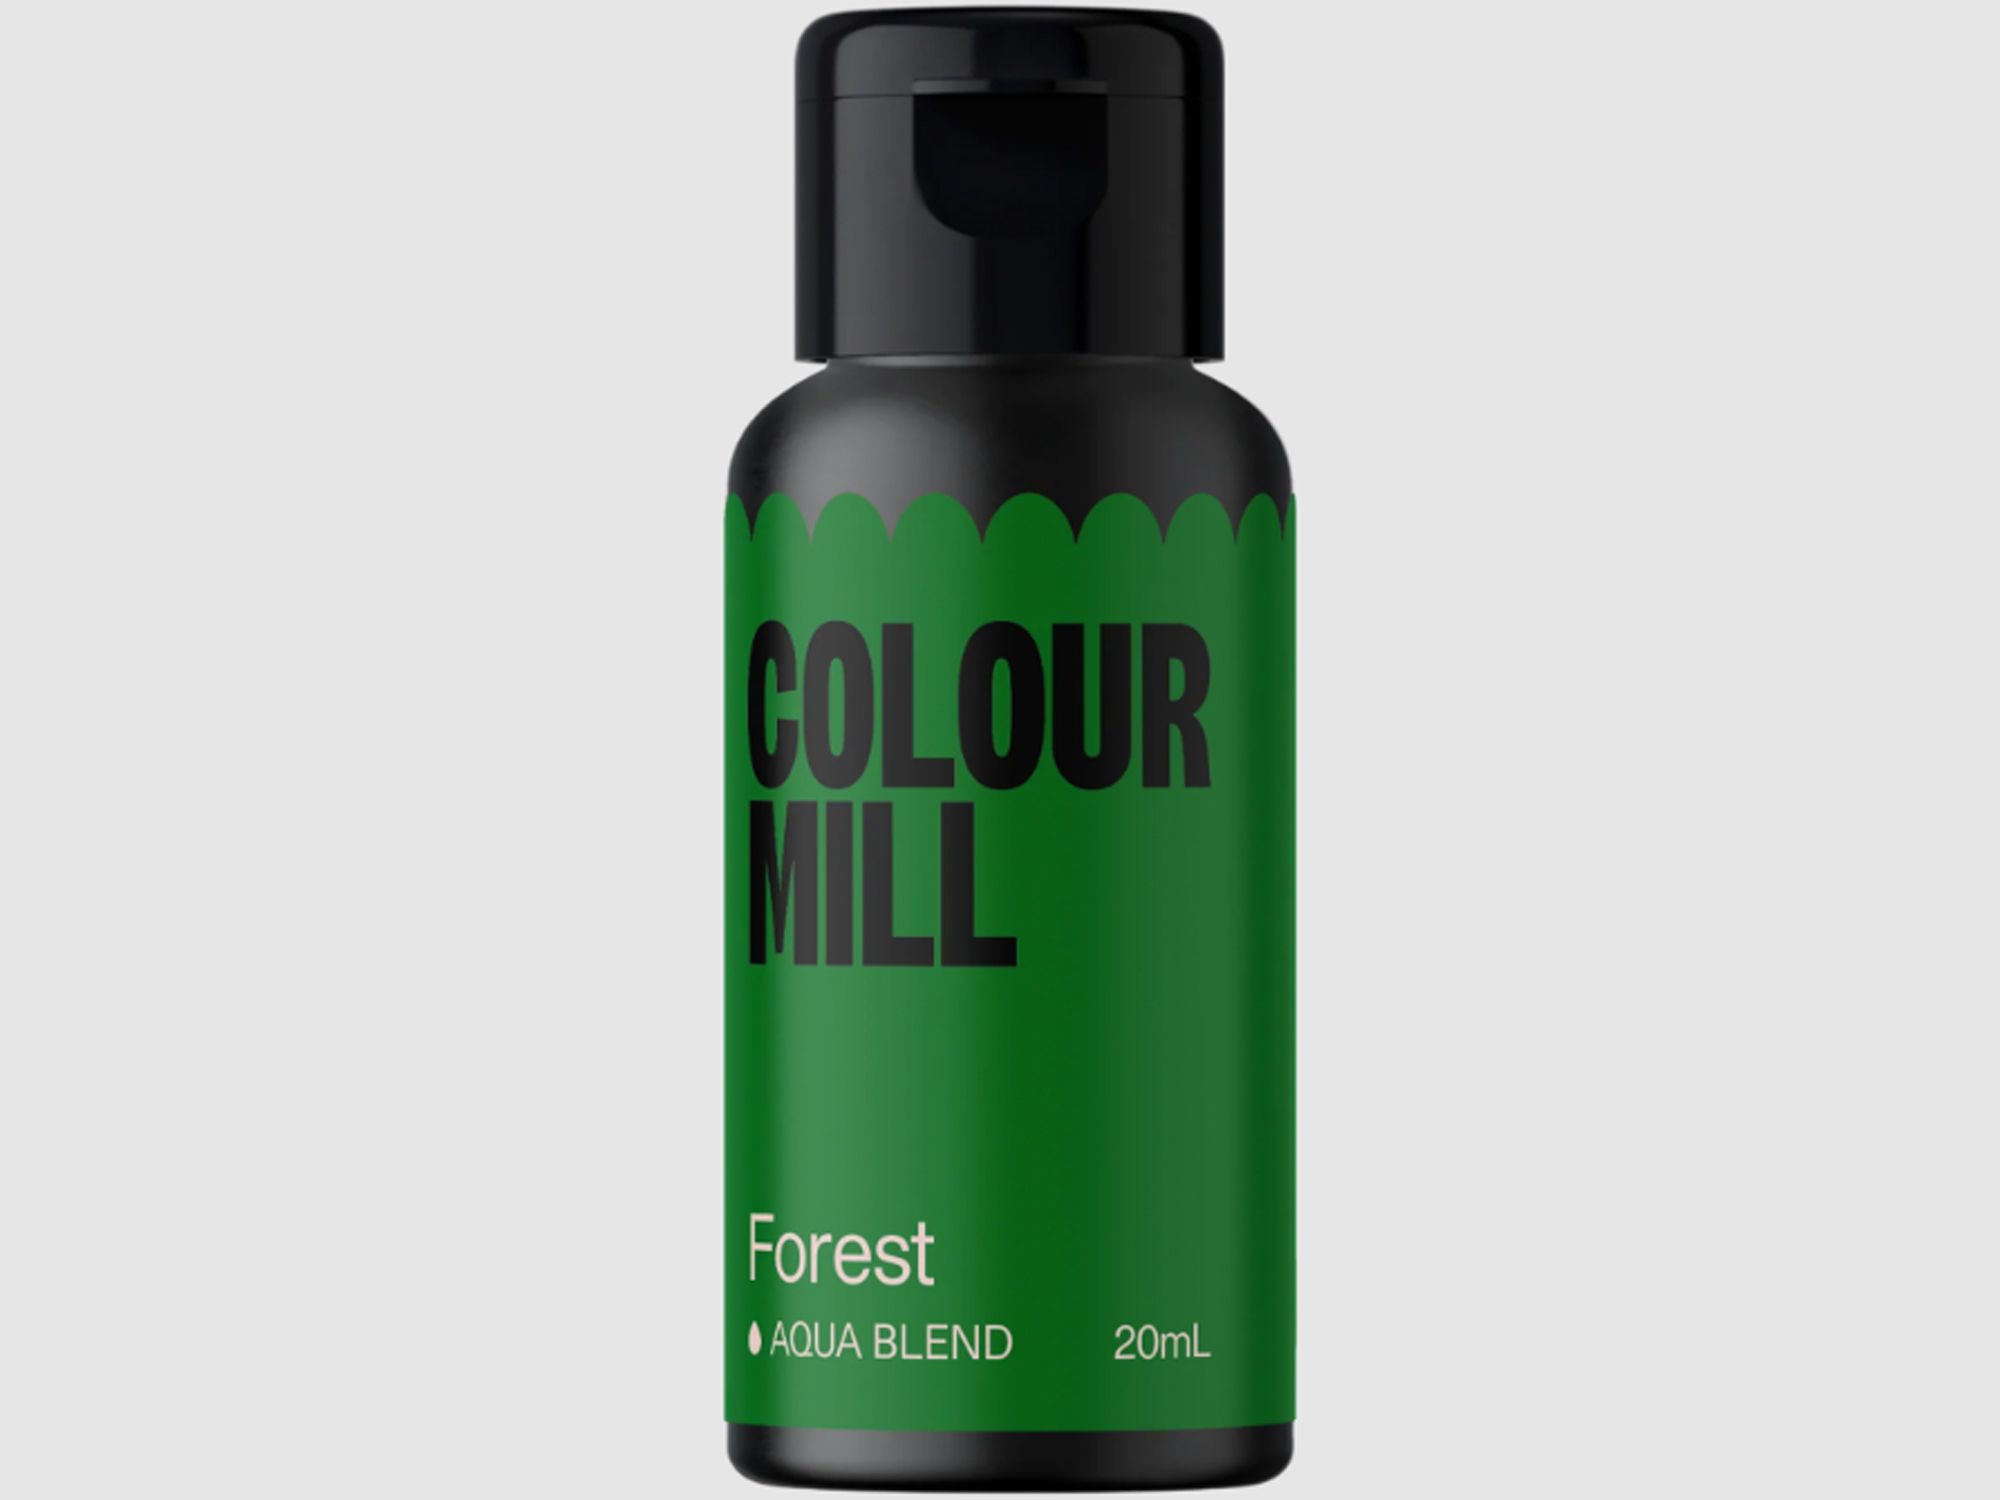 Colour Mill Forest (Aqua Blend) 20ml